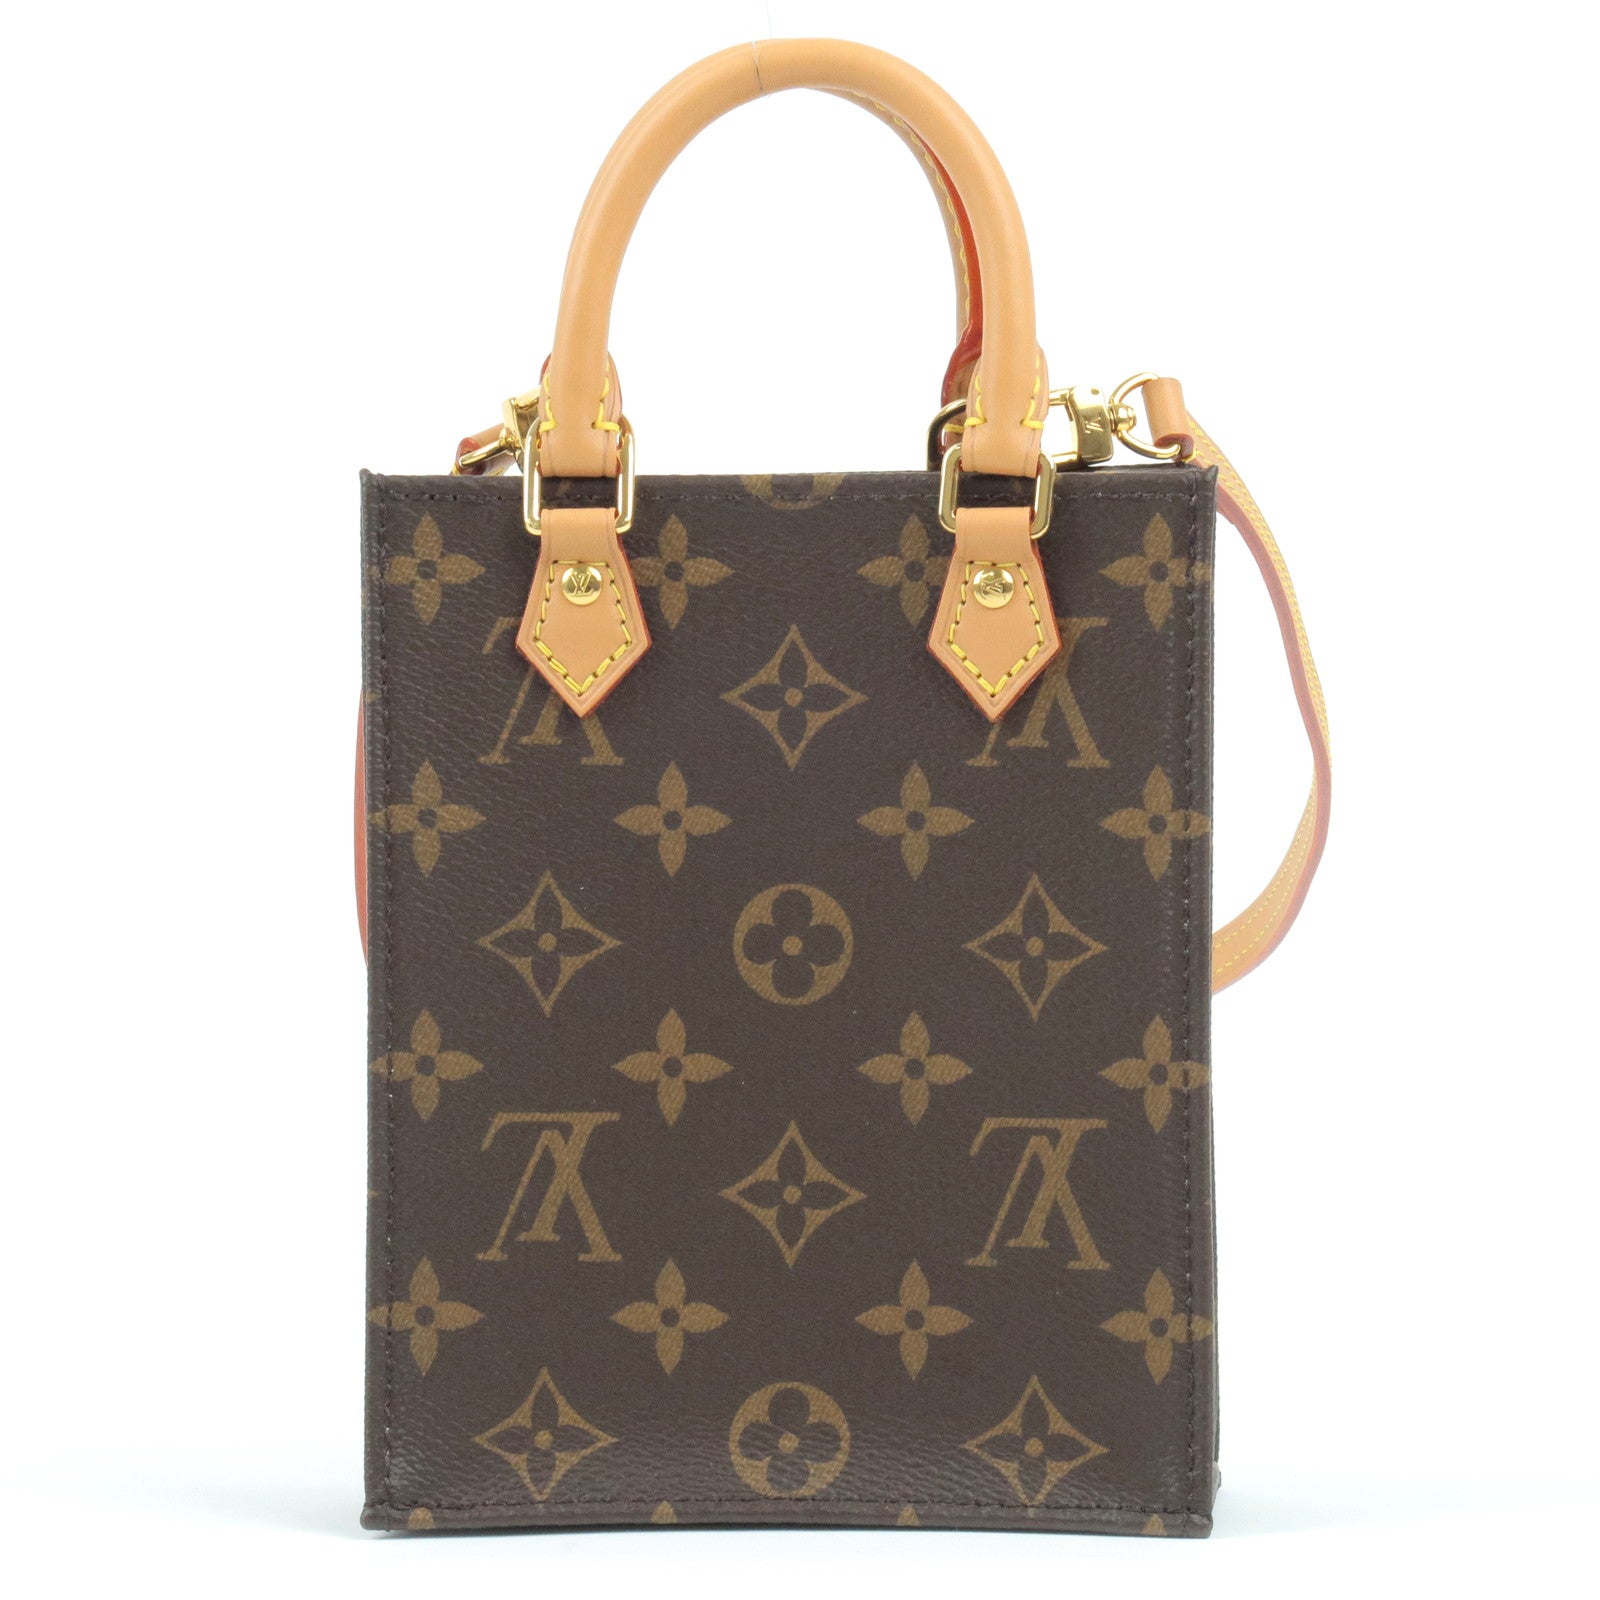 Plat - Sac - Tote - Hand - Bag - Vuitton - Louis Vuitton Monogram